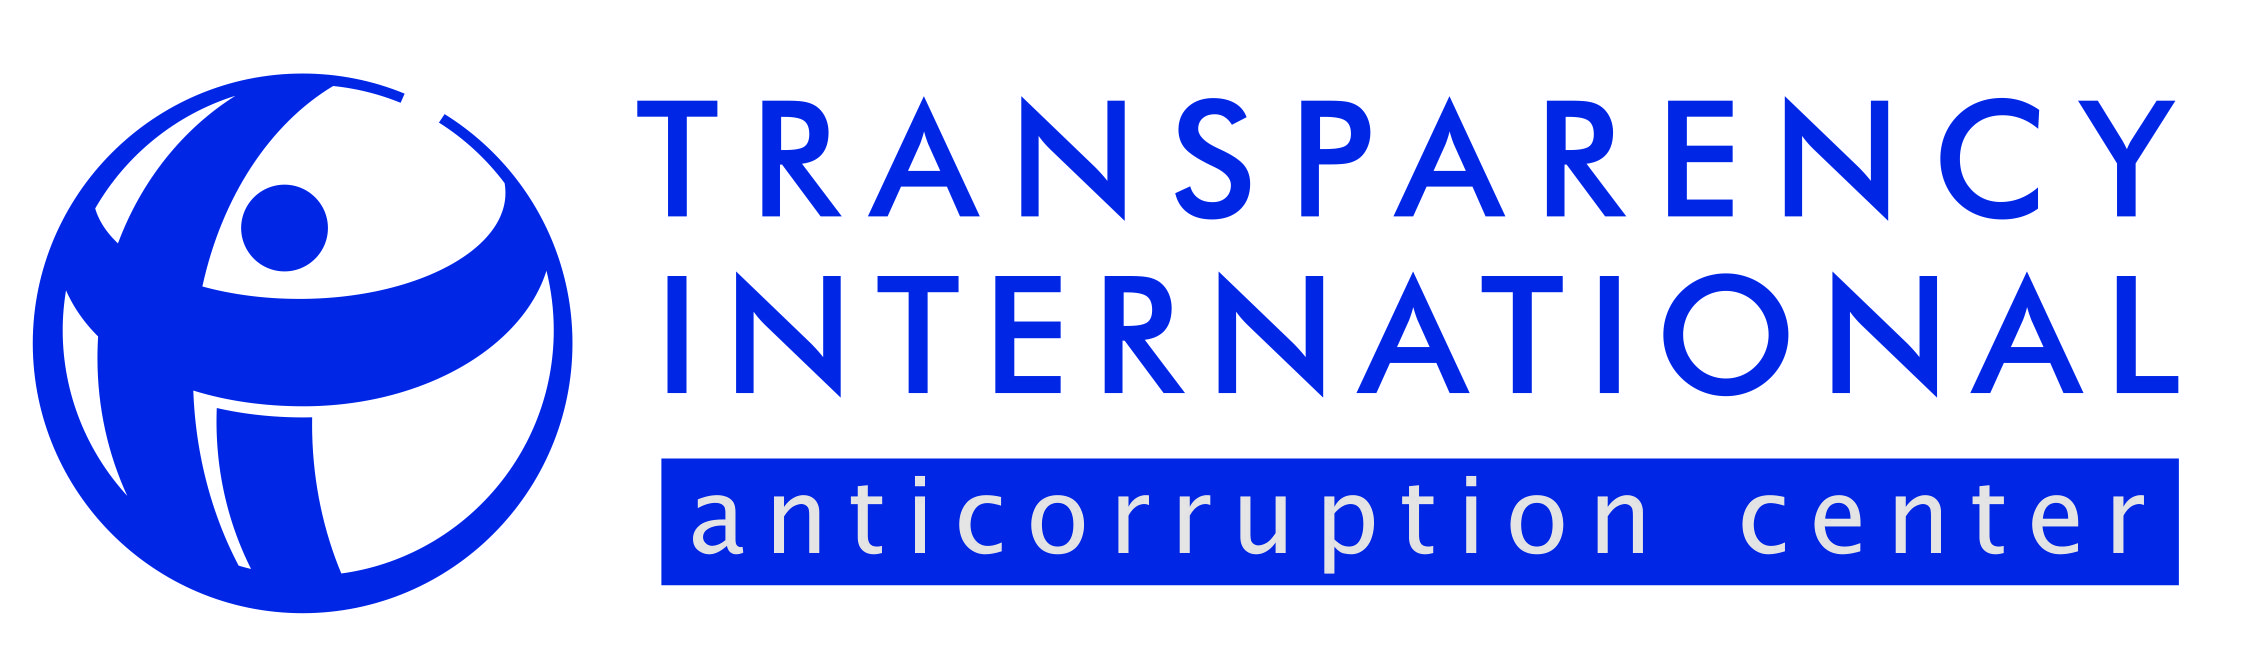 Transparency International Anticorruption Center PO